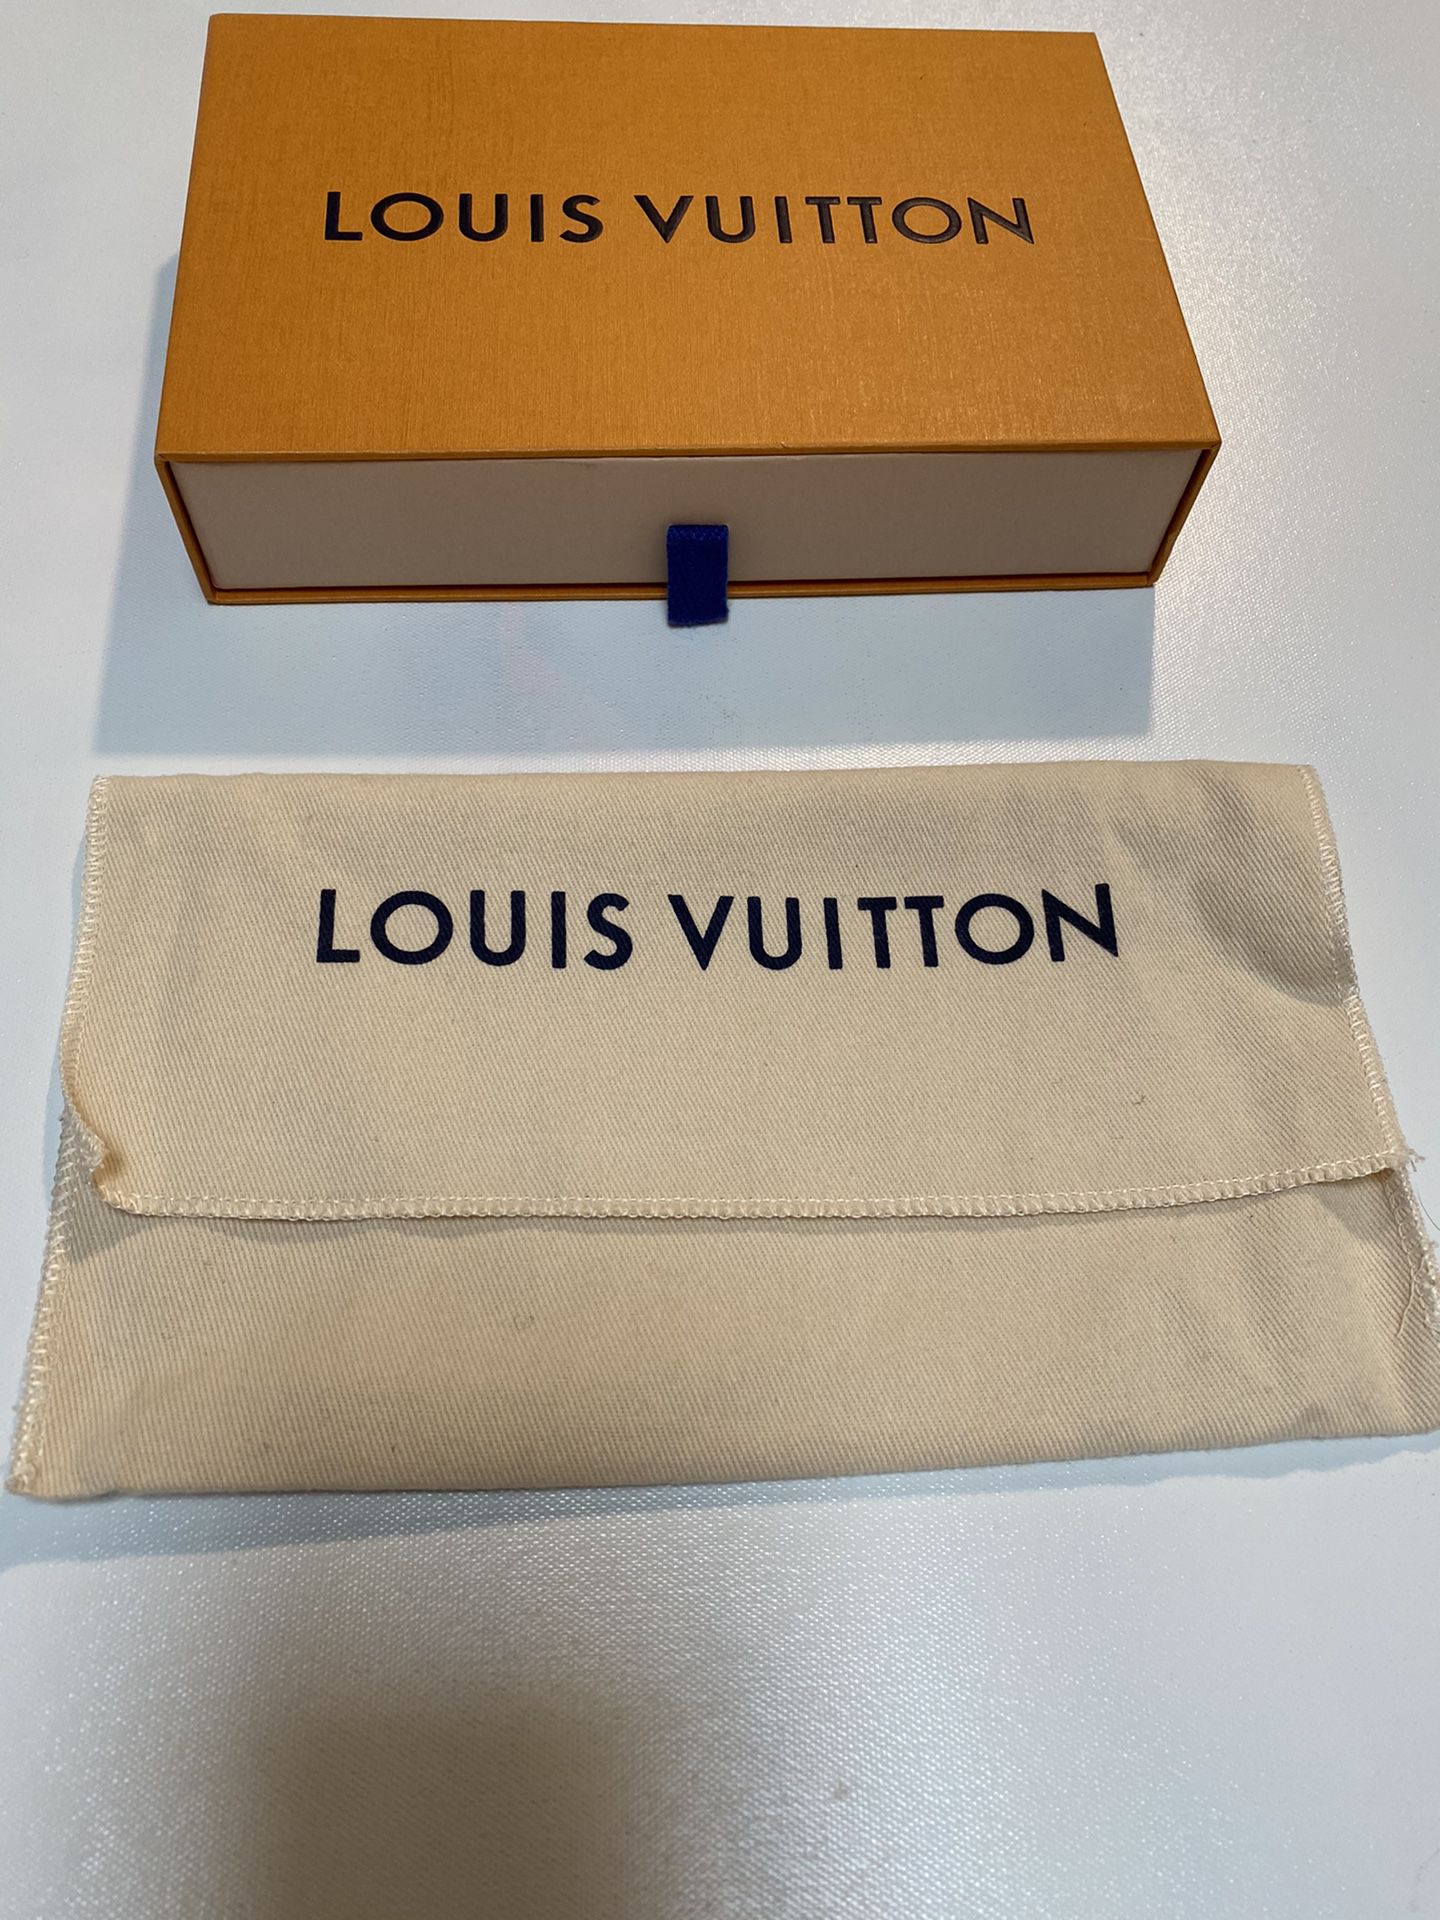 Louis Vuitton dust bag and box authentic